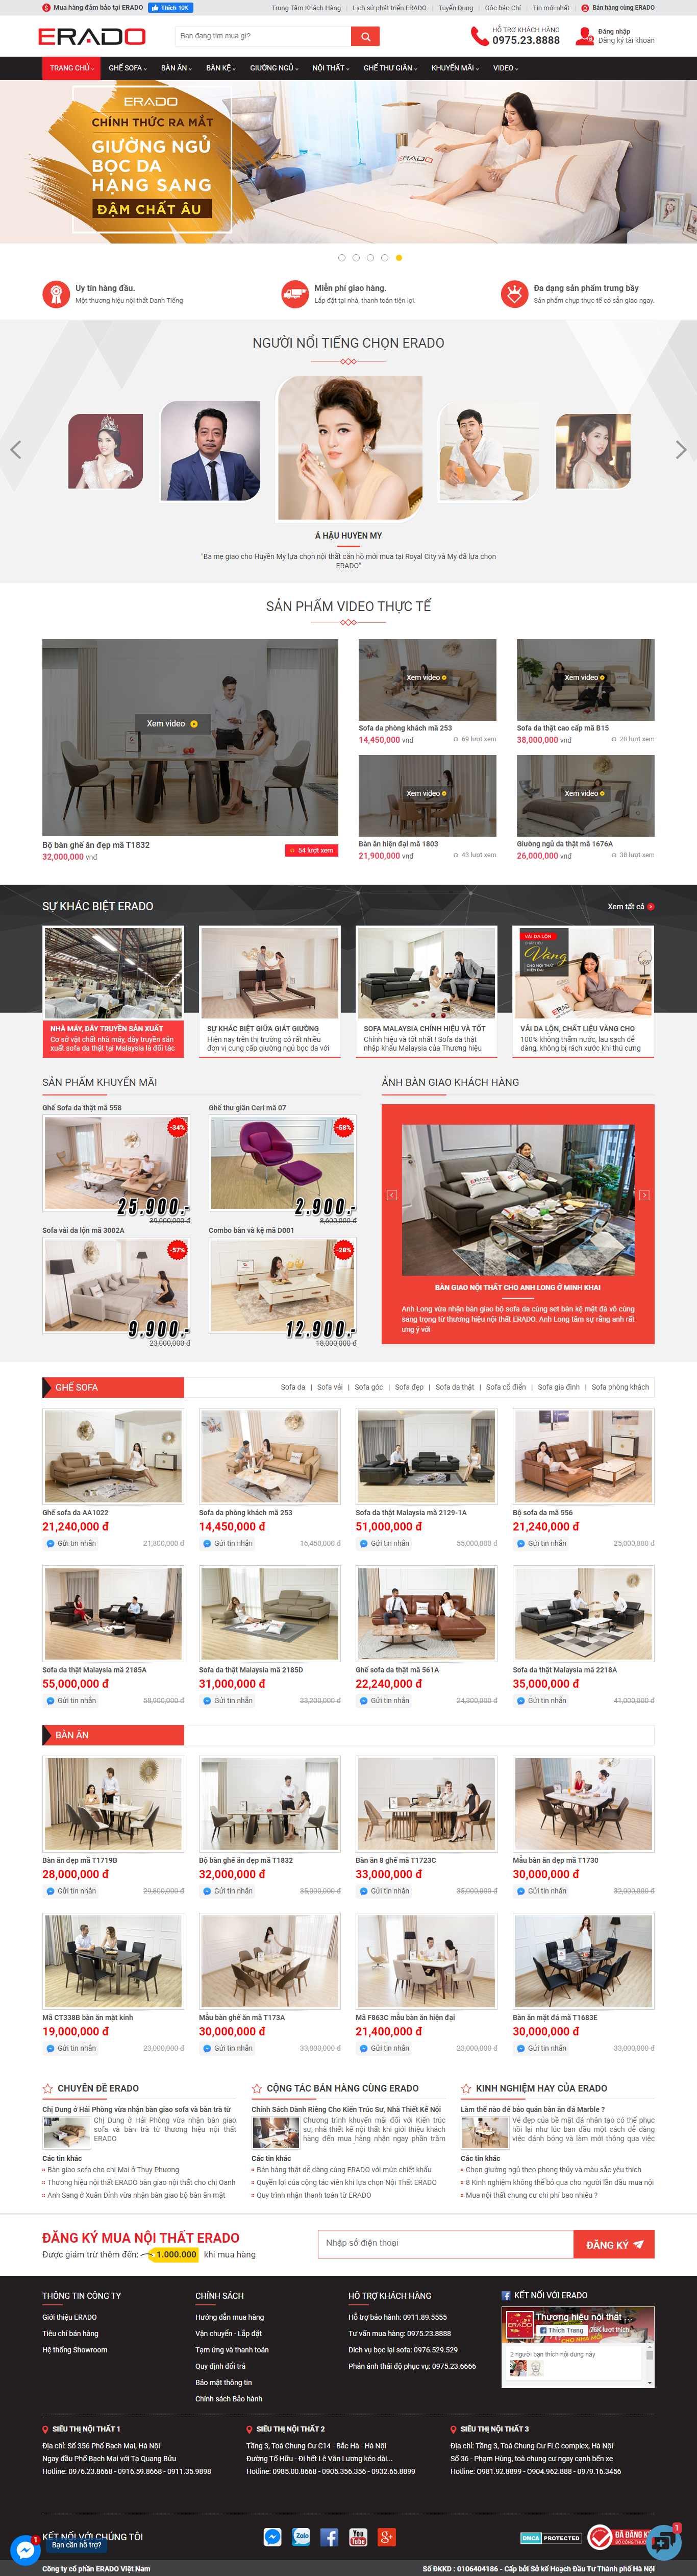 Thiết kế Website trang trí nội thất - erado.vn